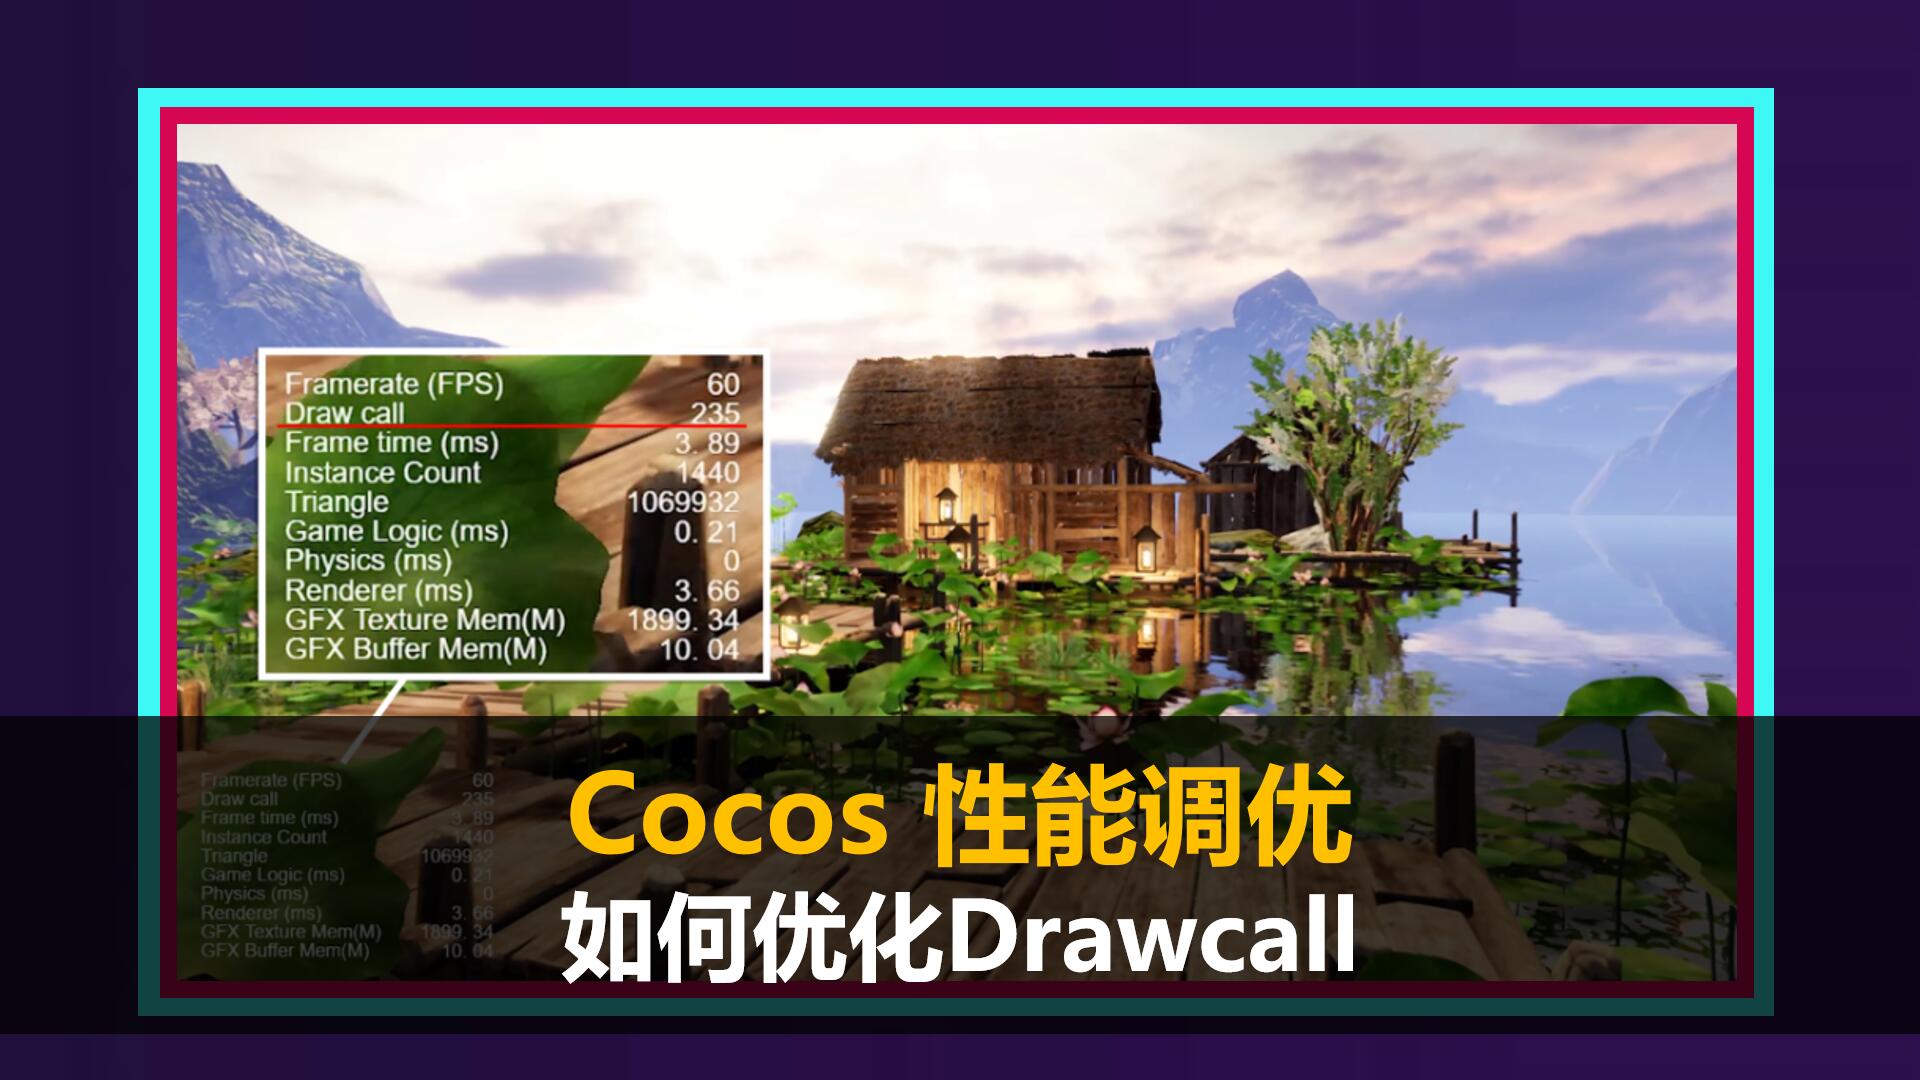 Cocos Creator 性能调优之《如何优化2D/3D Drawcall》